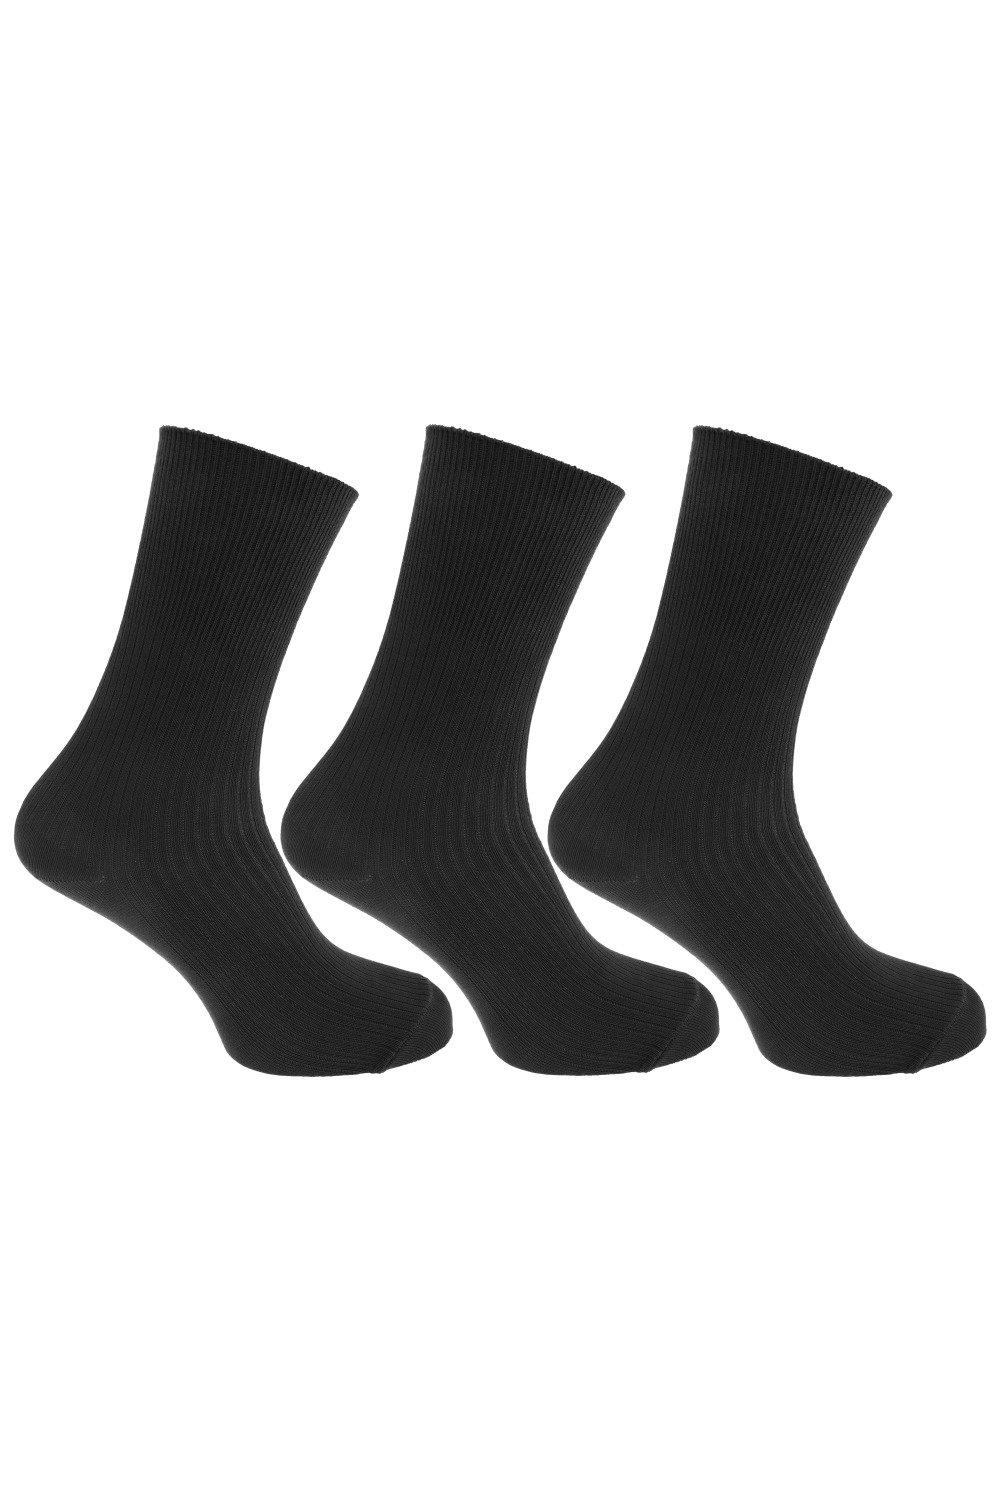 Casual Non Elastic Bamboo Viscose Socks (Pack Of 3)